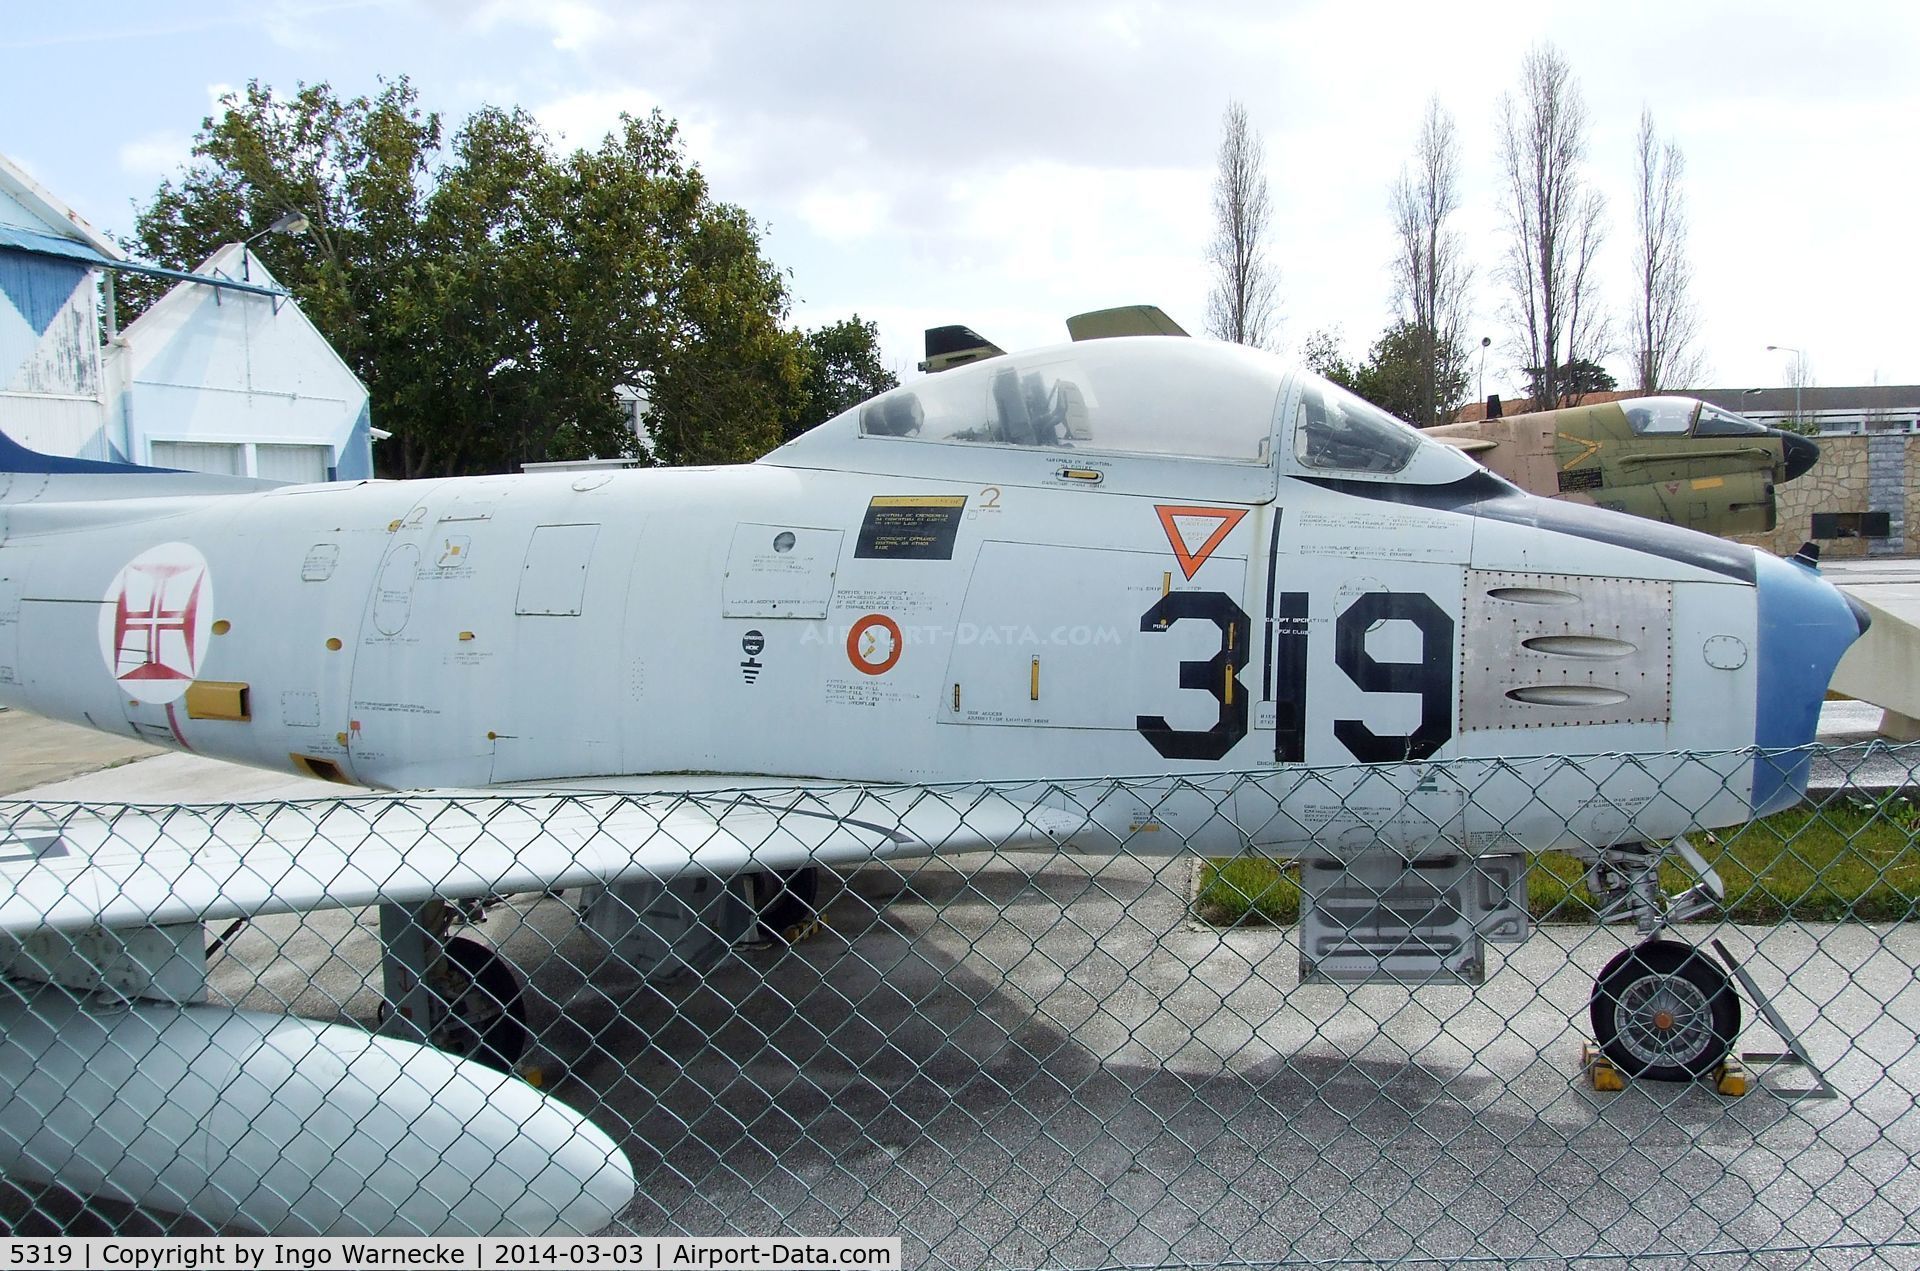 5319, 1952 North American F-86F Sabre C/N 191-958, North American F-86F Sabre at the Museu do Ar, Alverca